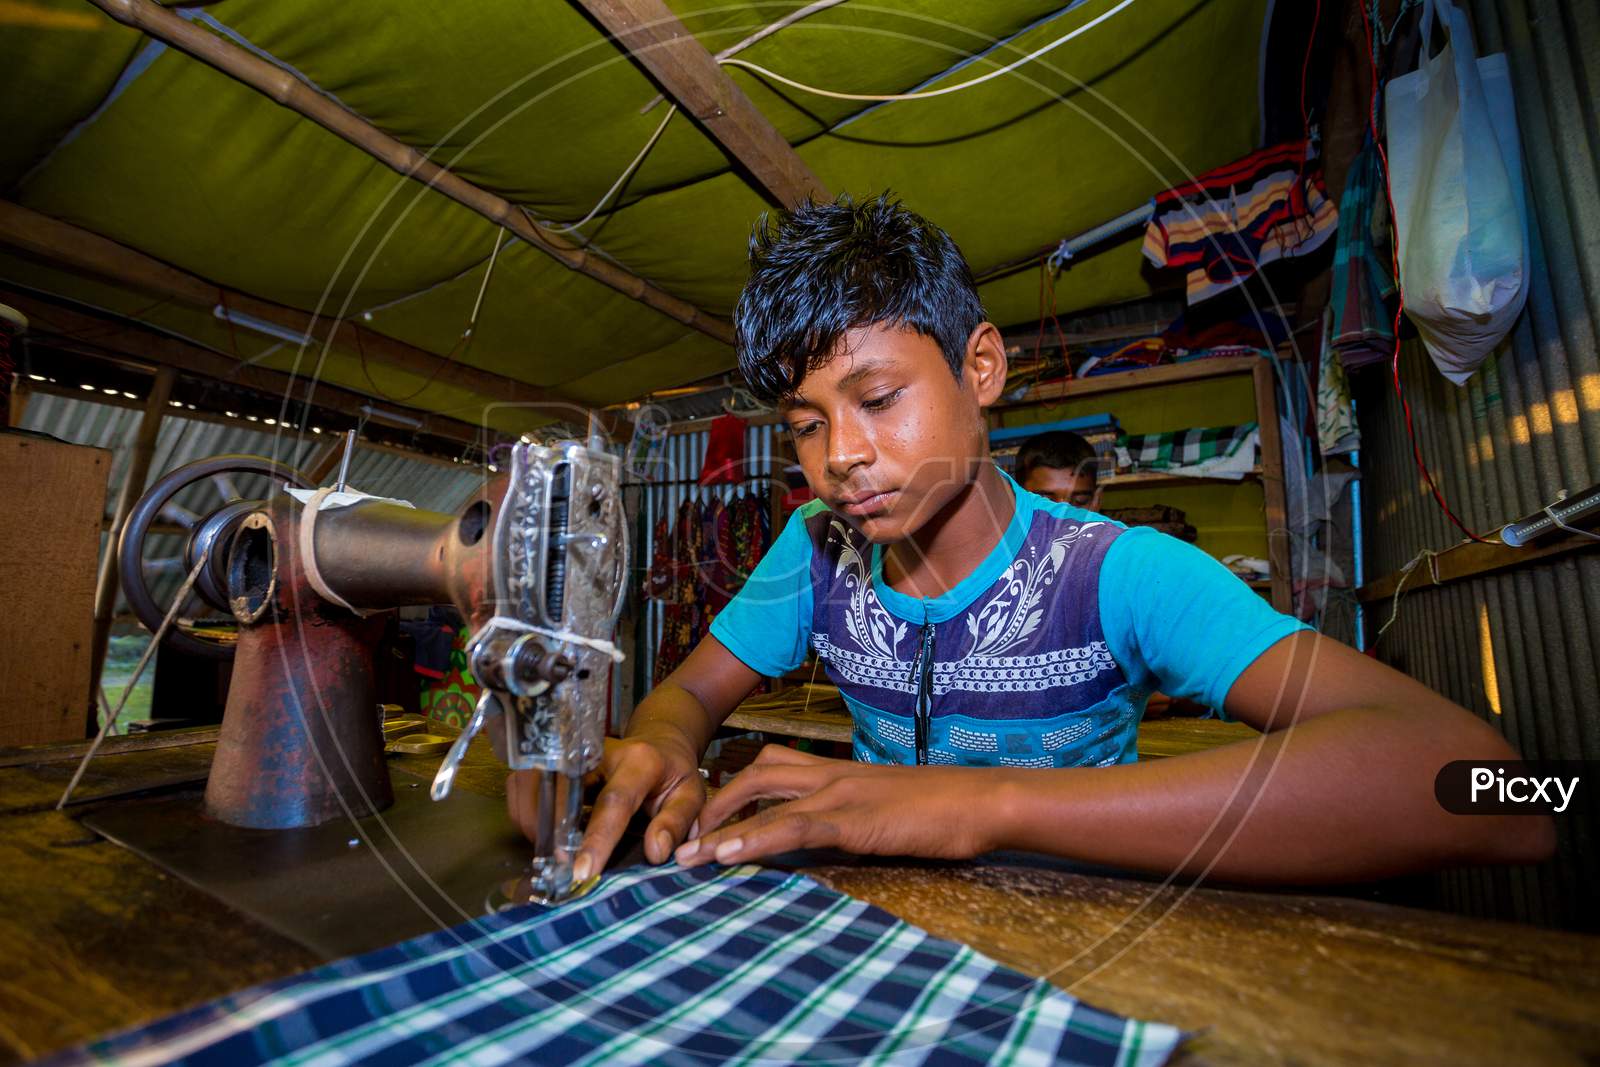 Bangladesh – October 28, 2019: A Young Boy Working As A Tailor Labor At Rural Village Tailor Shop, Chandpur, Bangladesh.